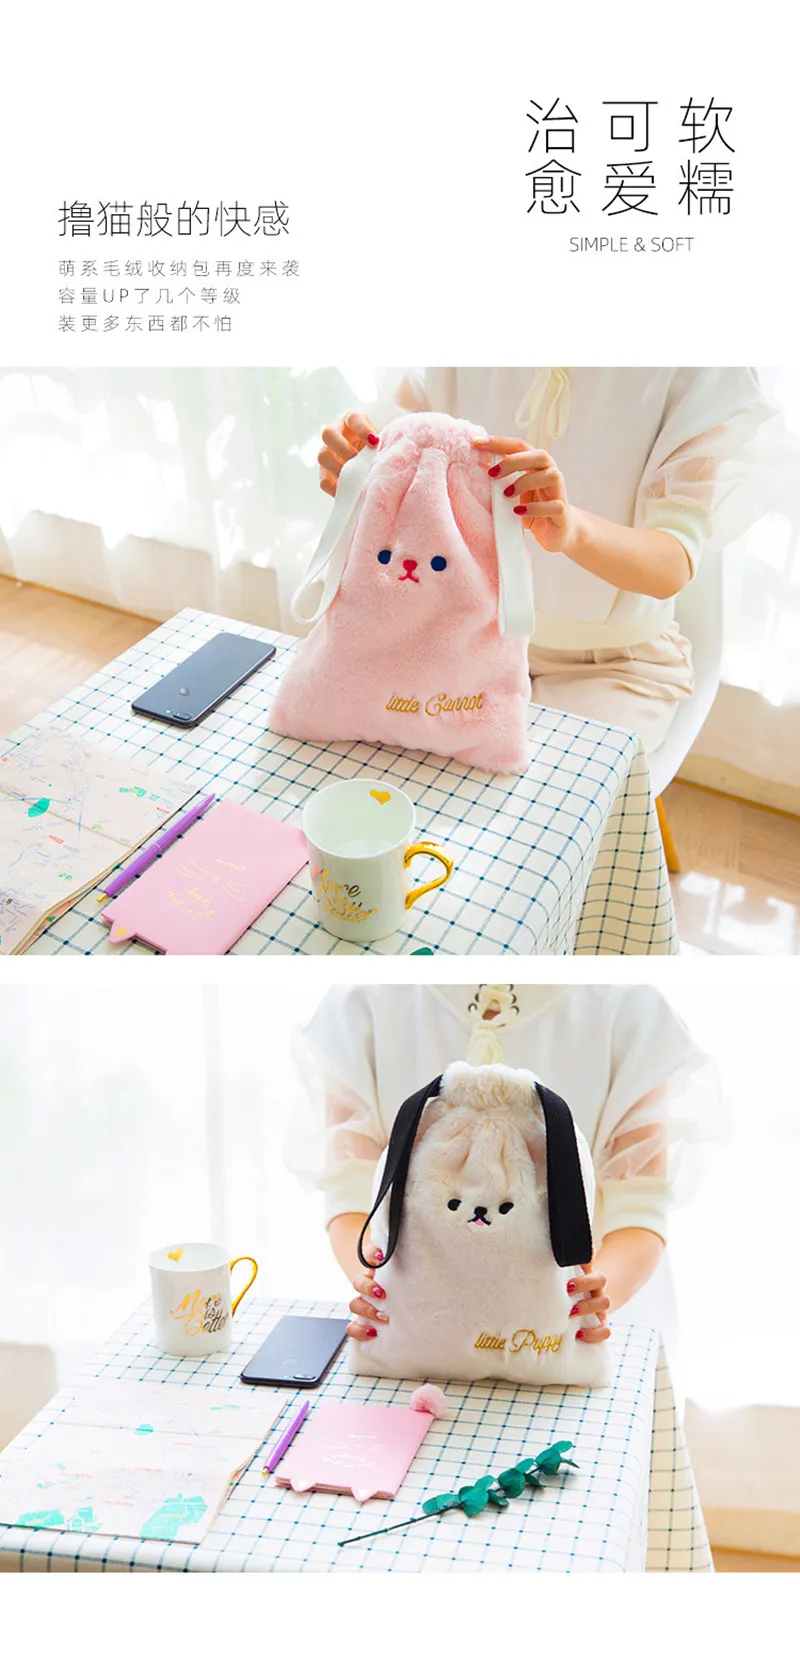 Bentoy Cute Dog Embroidery Drawstring Bag Plush Travel Clothes Organizer Tote Handbag Bouquet Pocket Women Shoulder Bag